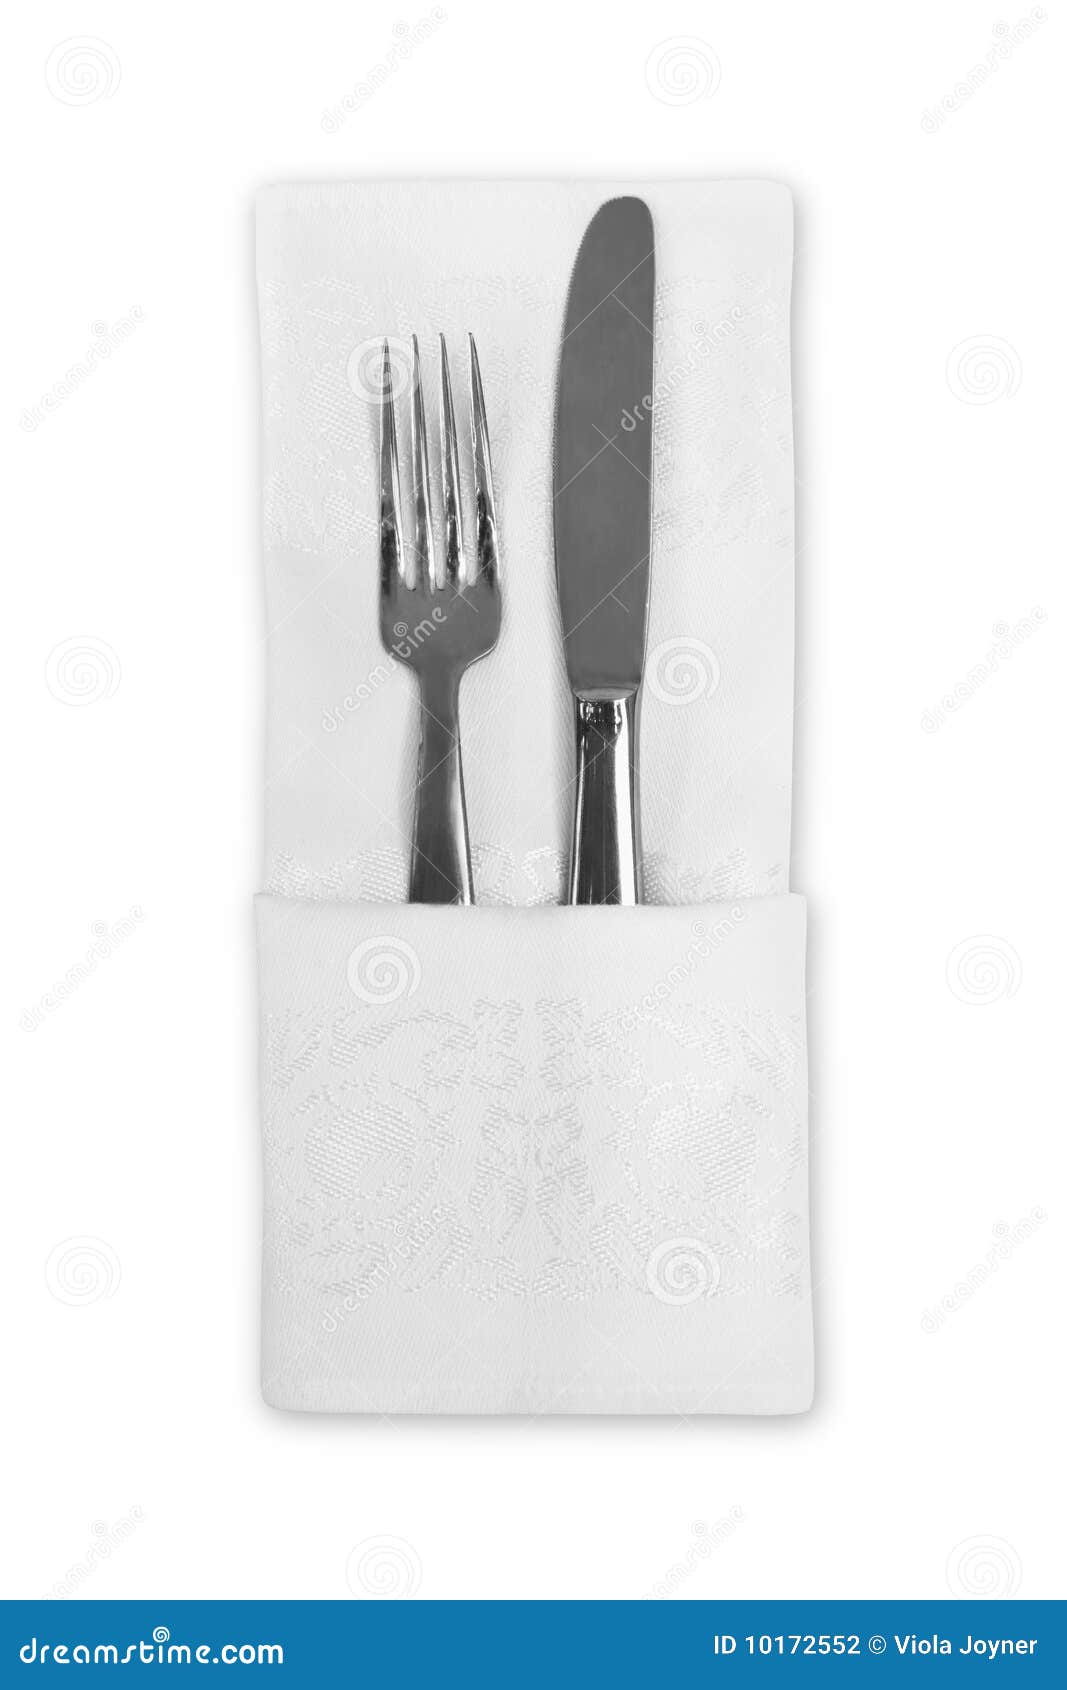 flatware and white linen napkin